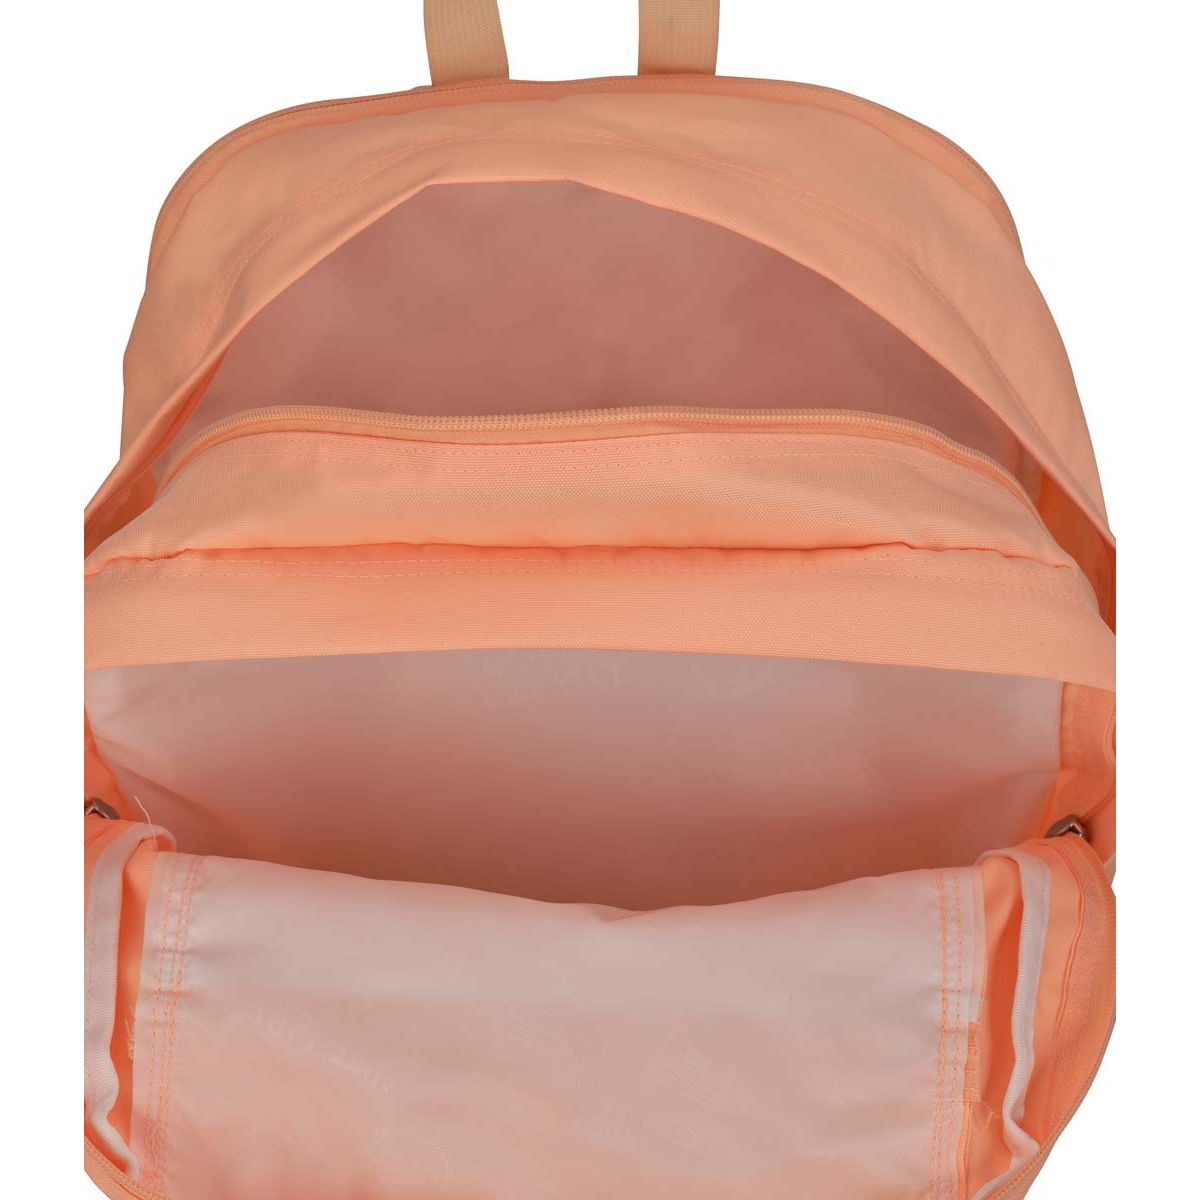 JanSport Big Student Backpack - Peach Neon